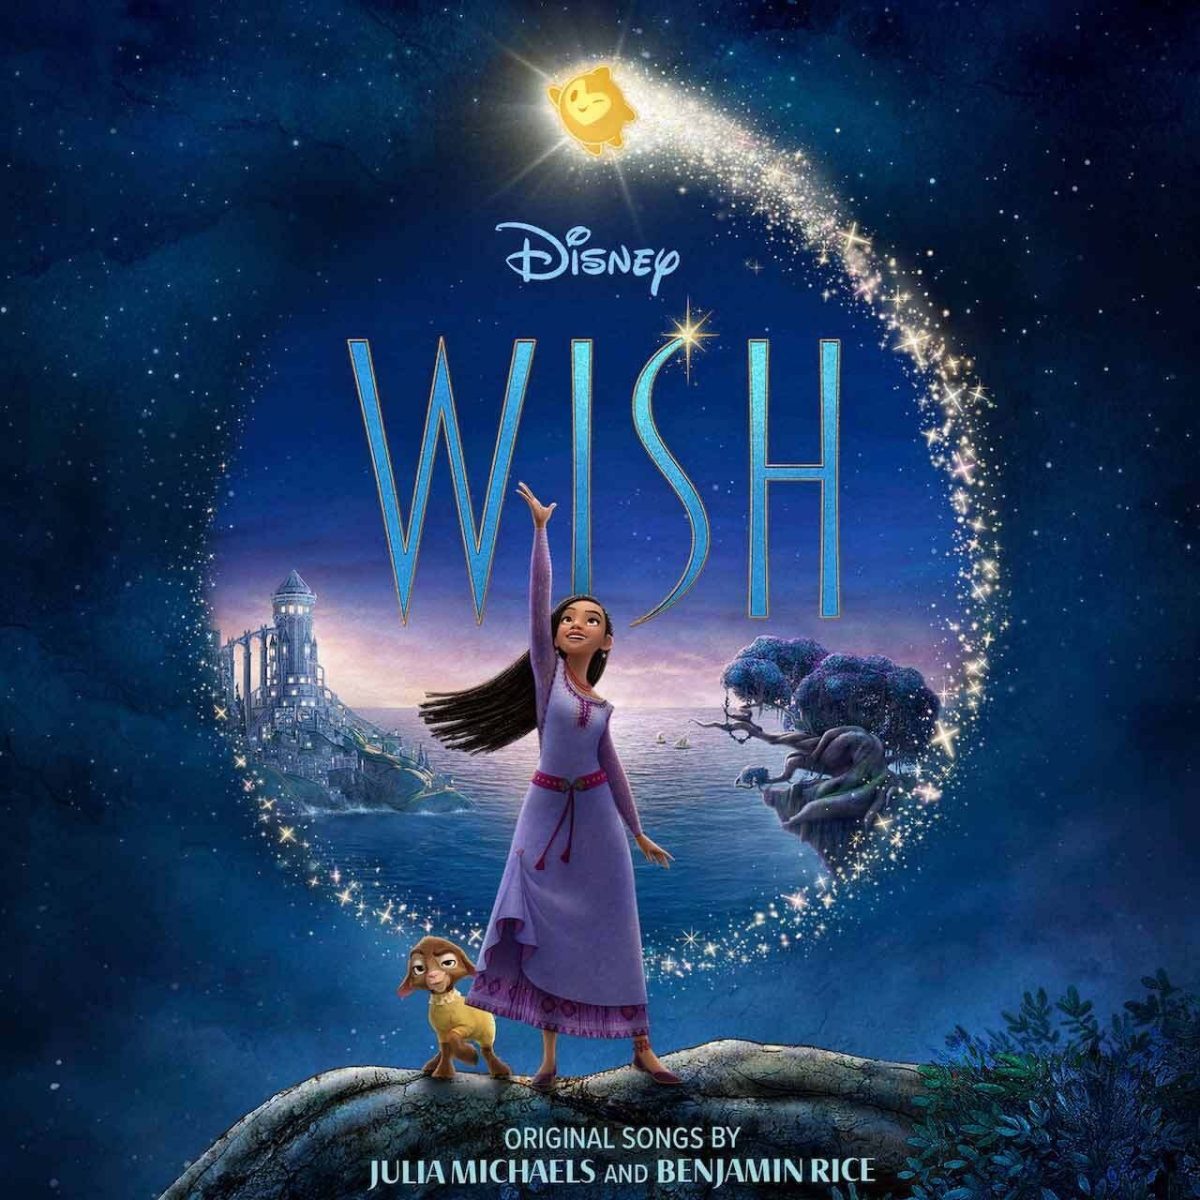 Disneys new movie: Wish